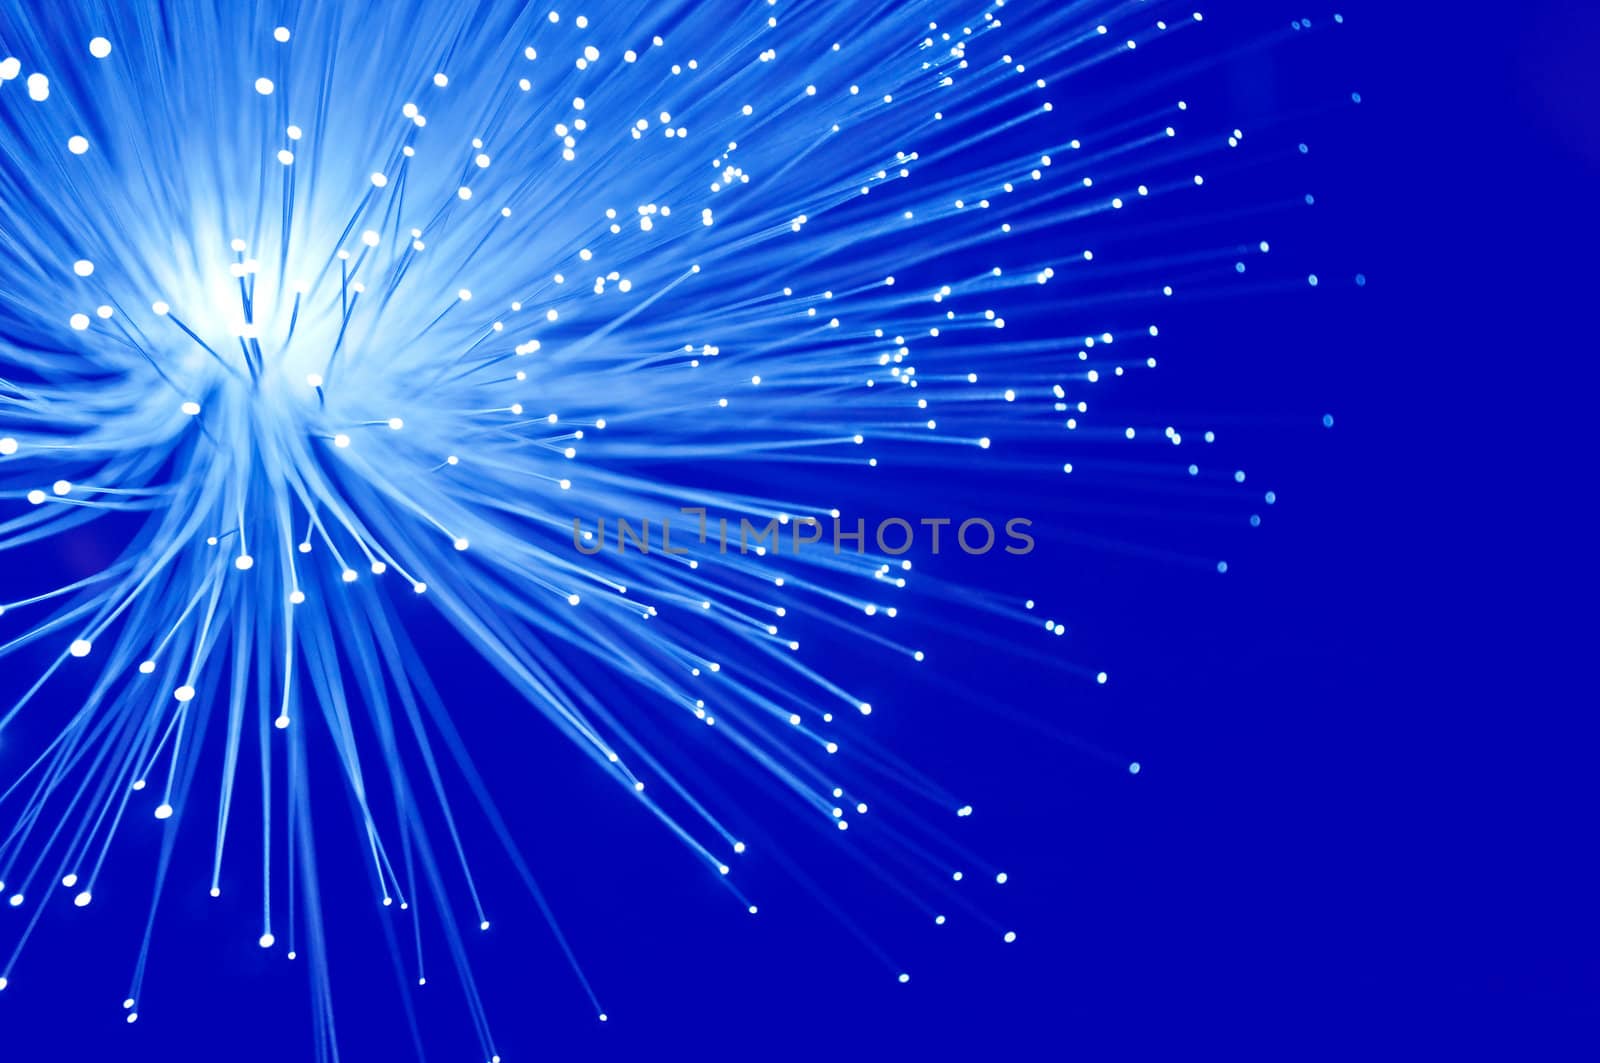 Close up capturing illuminated blue fibre optic light strands against a vibrant blue background.